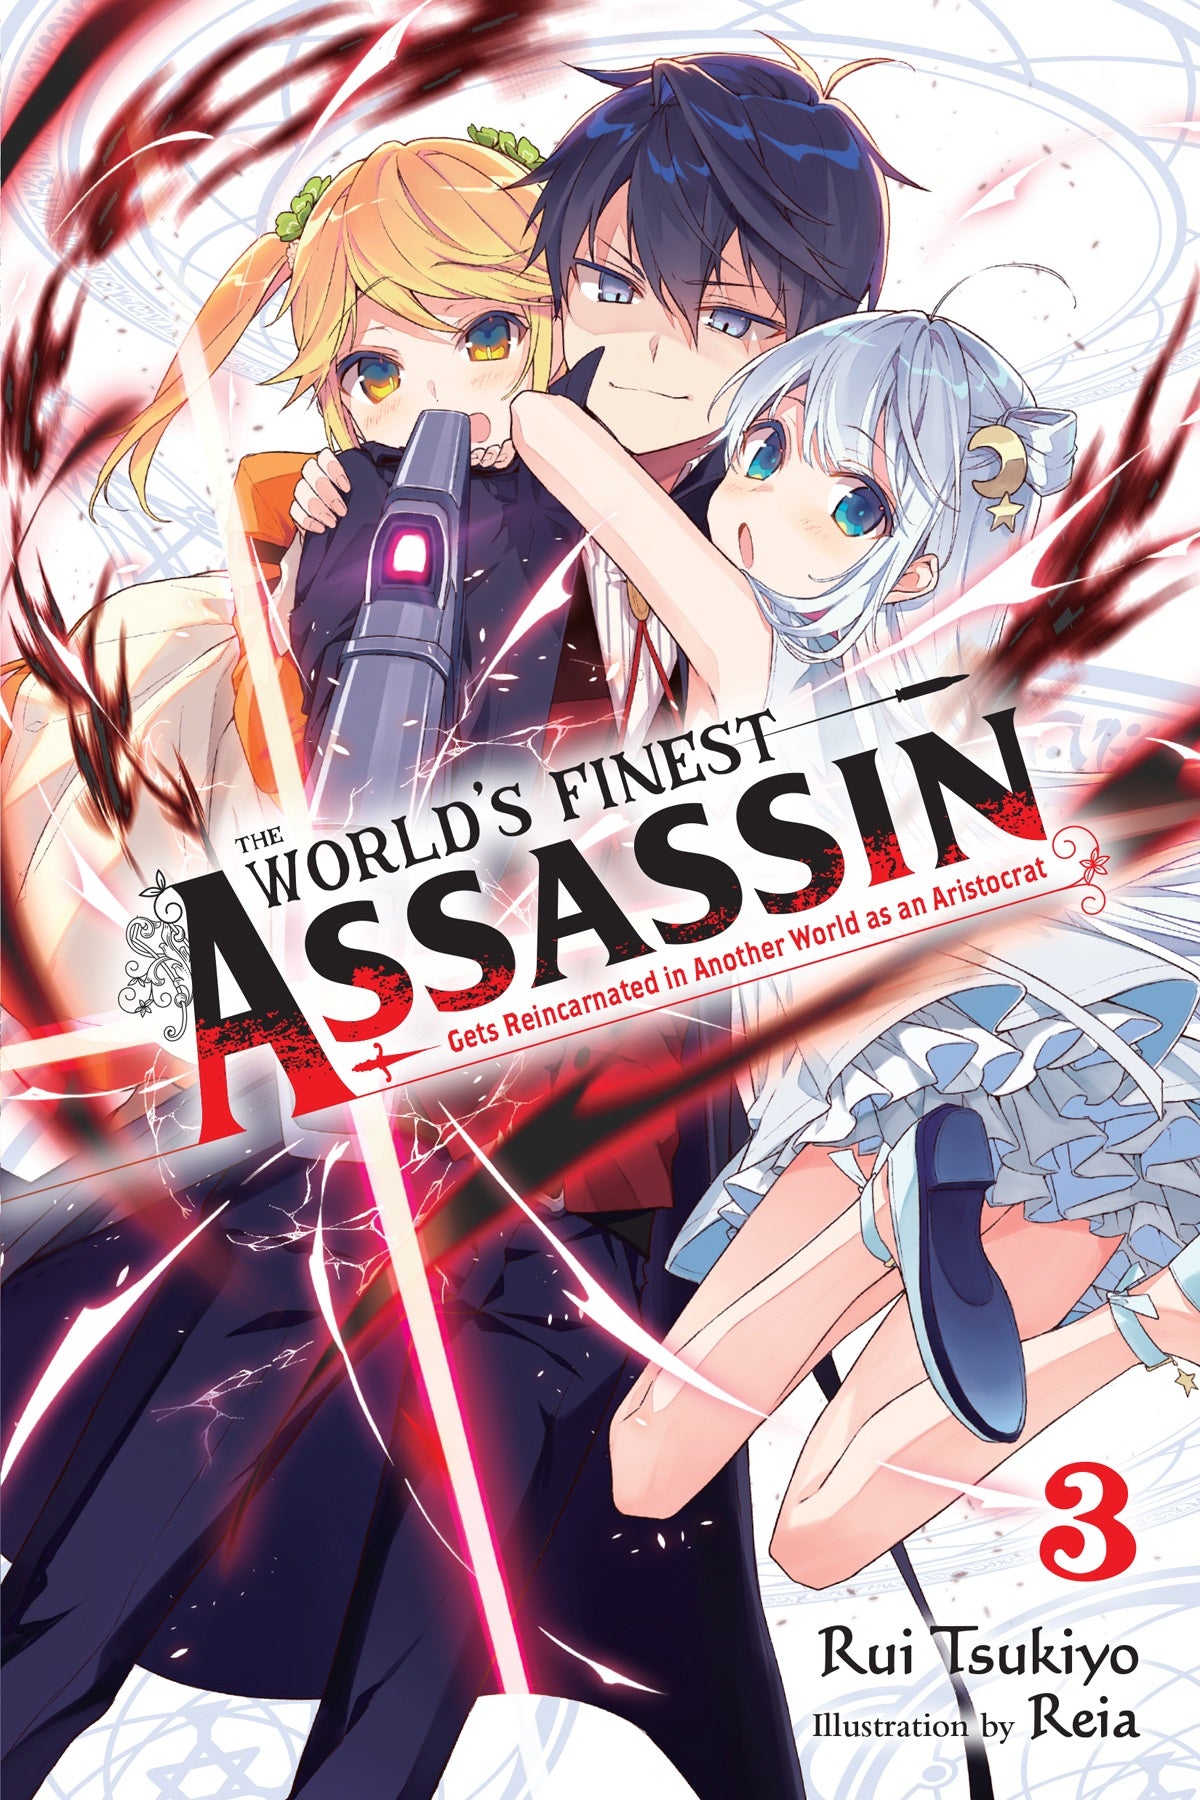 The World's Finest Assassin Gets Reincarnated in Another World as an Aristocrat Vol. 03 (Light Novel)